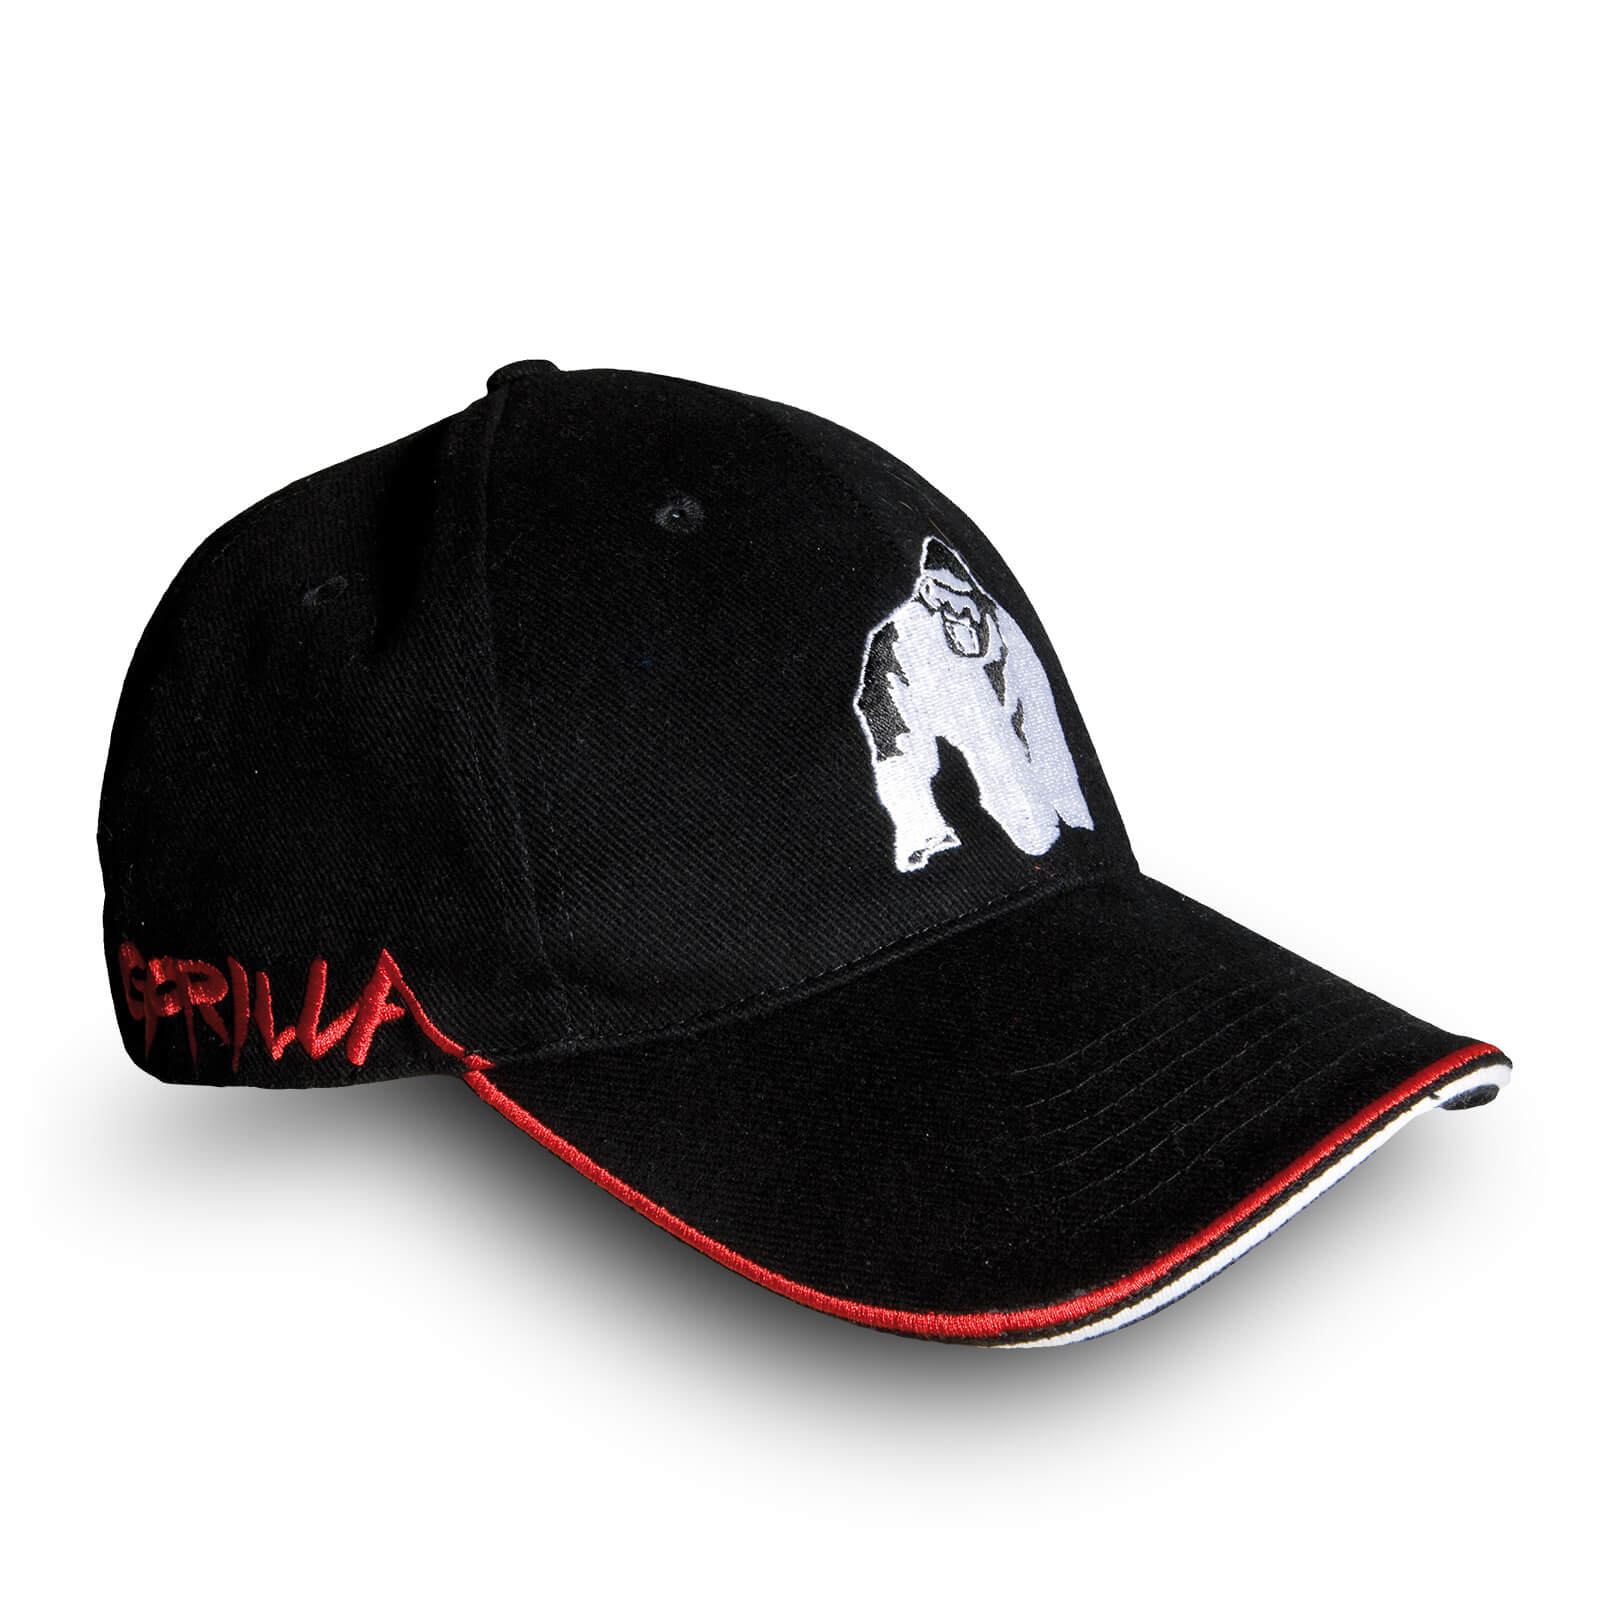 Kolla in Gorilla Core Cap, Gorilla Wear hos SportGymButiken.se